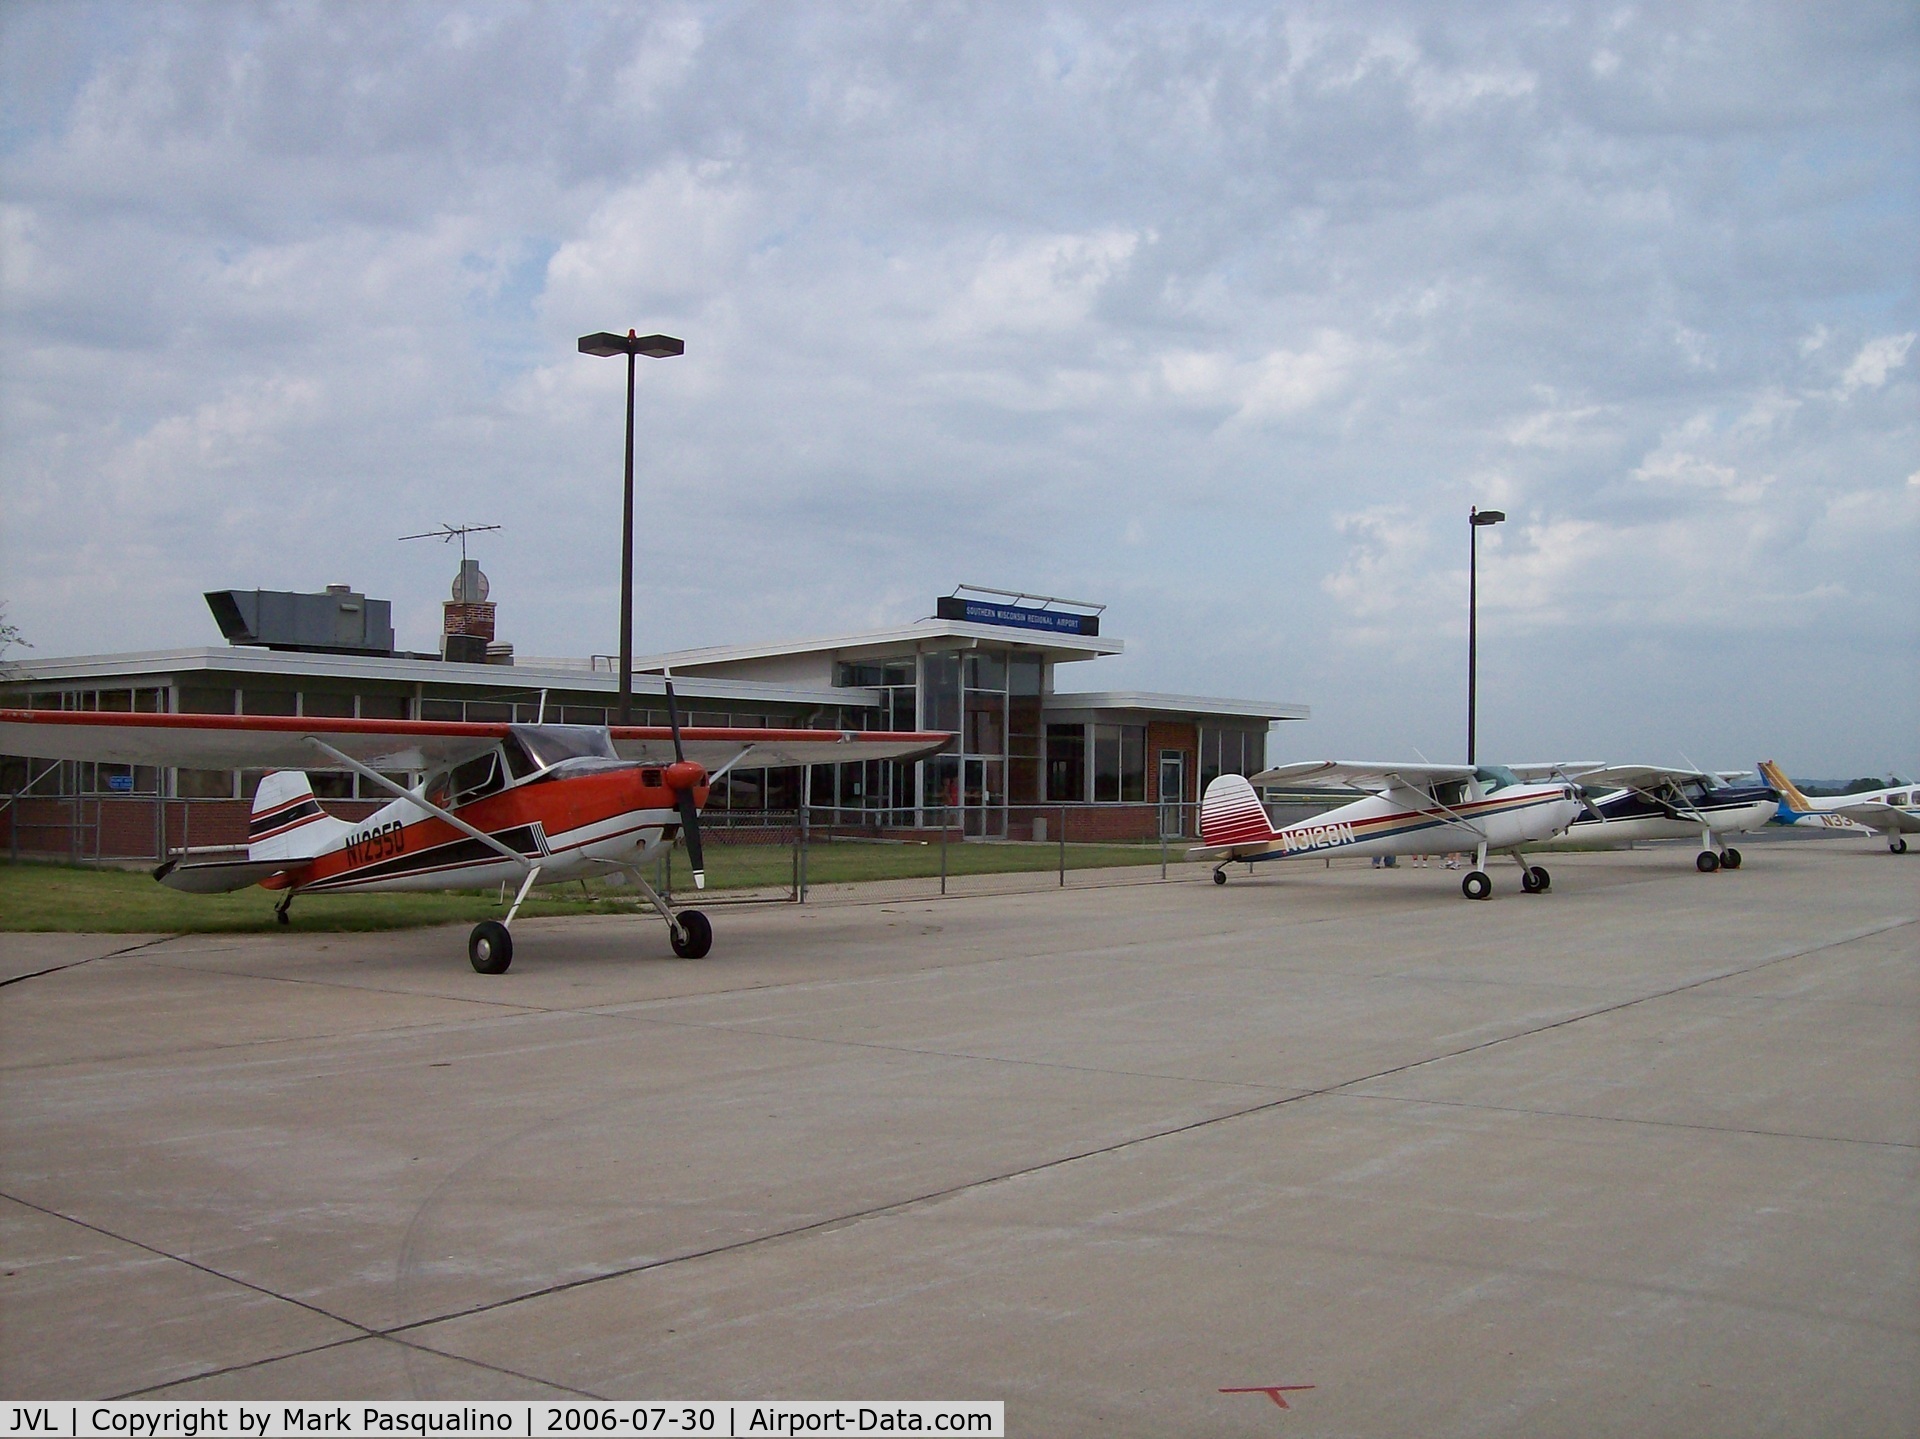 Southern Wisconsin Regional Airport (JVL) - Main Terminal